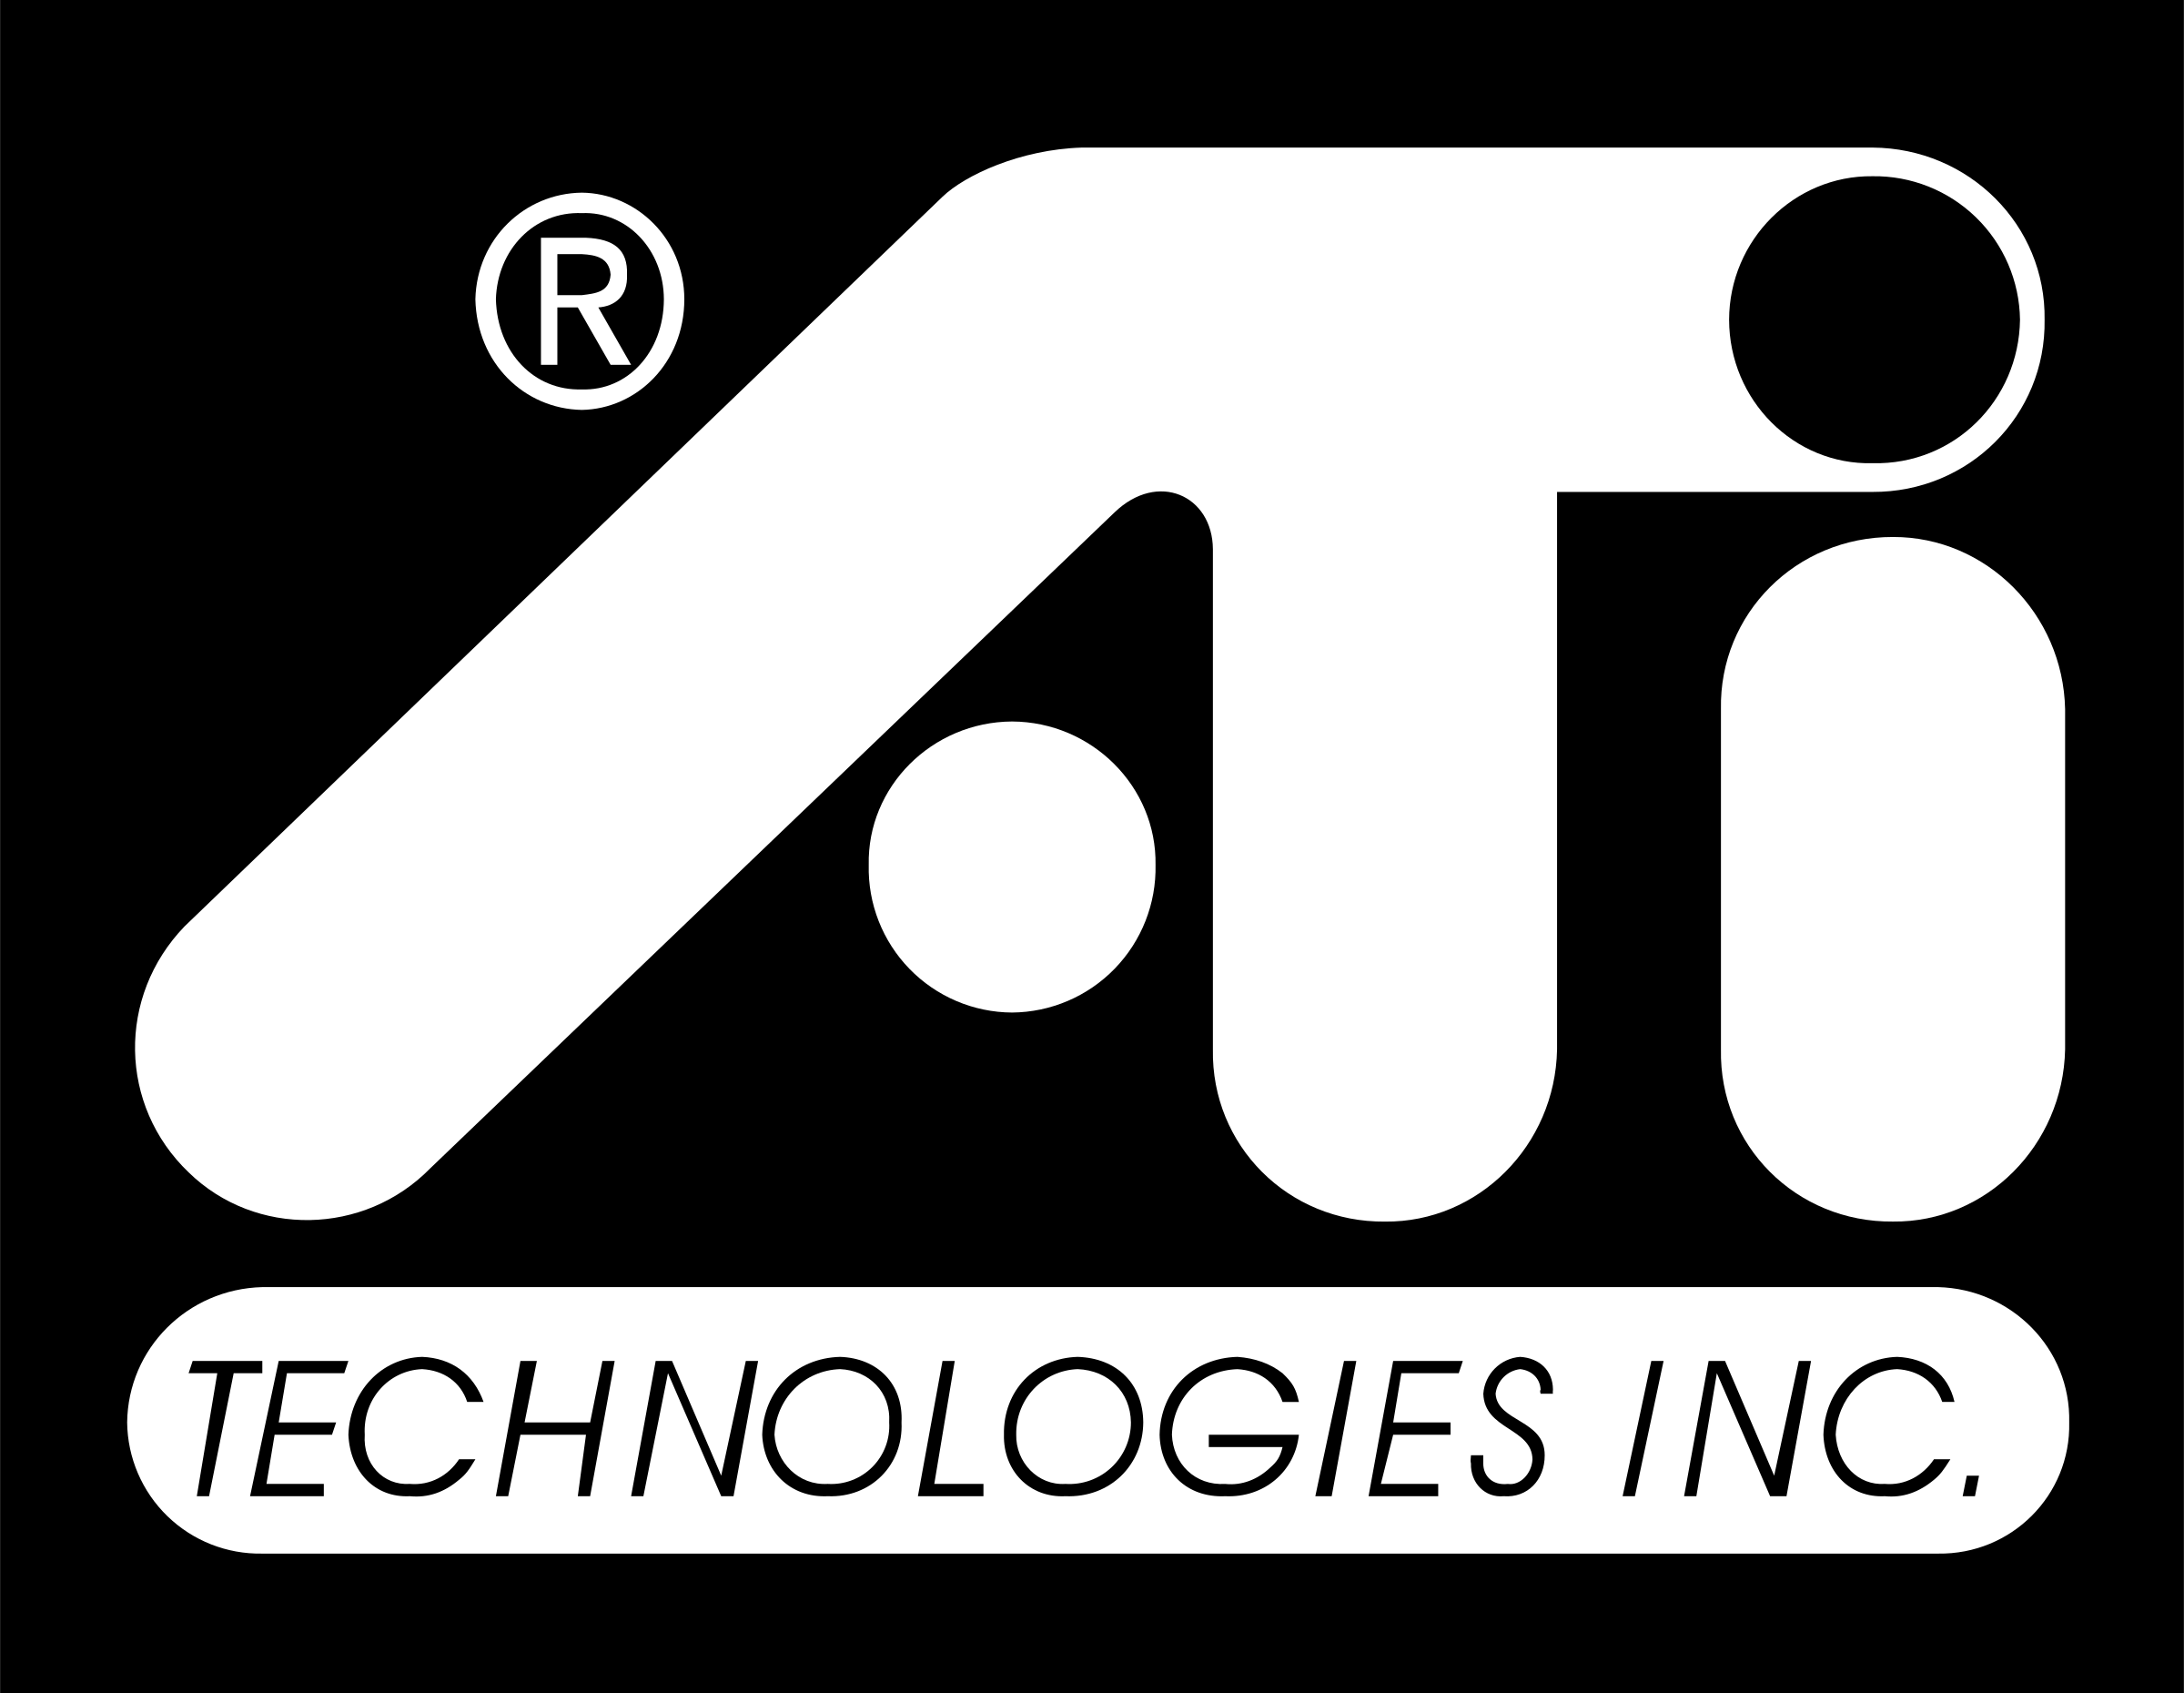 ATI Logo - ATI Logo PNG Transparent & SVG Vector - Freebie Supply